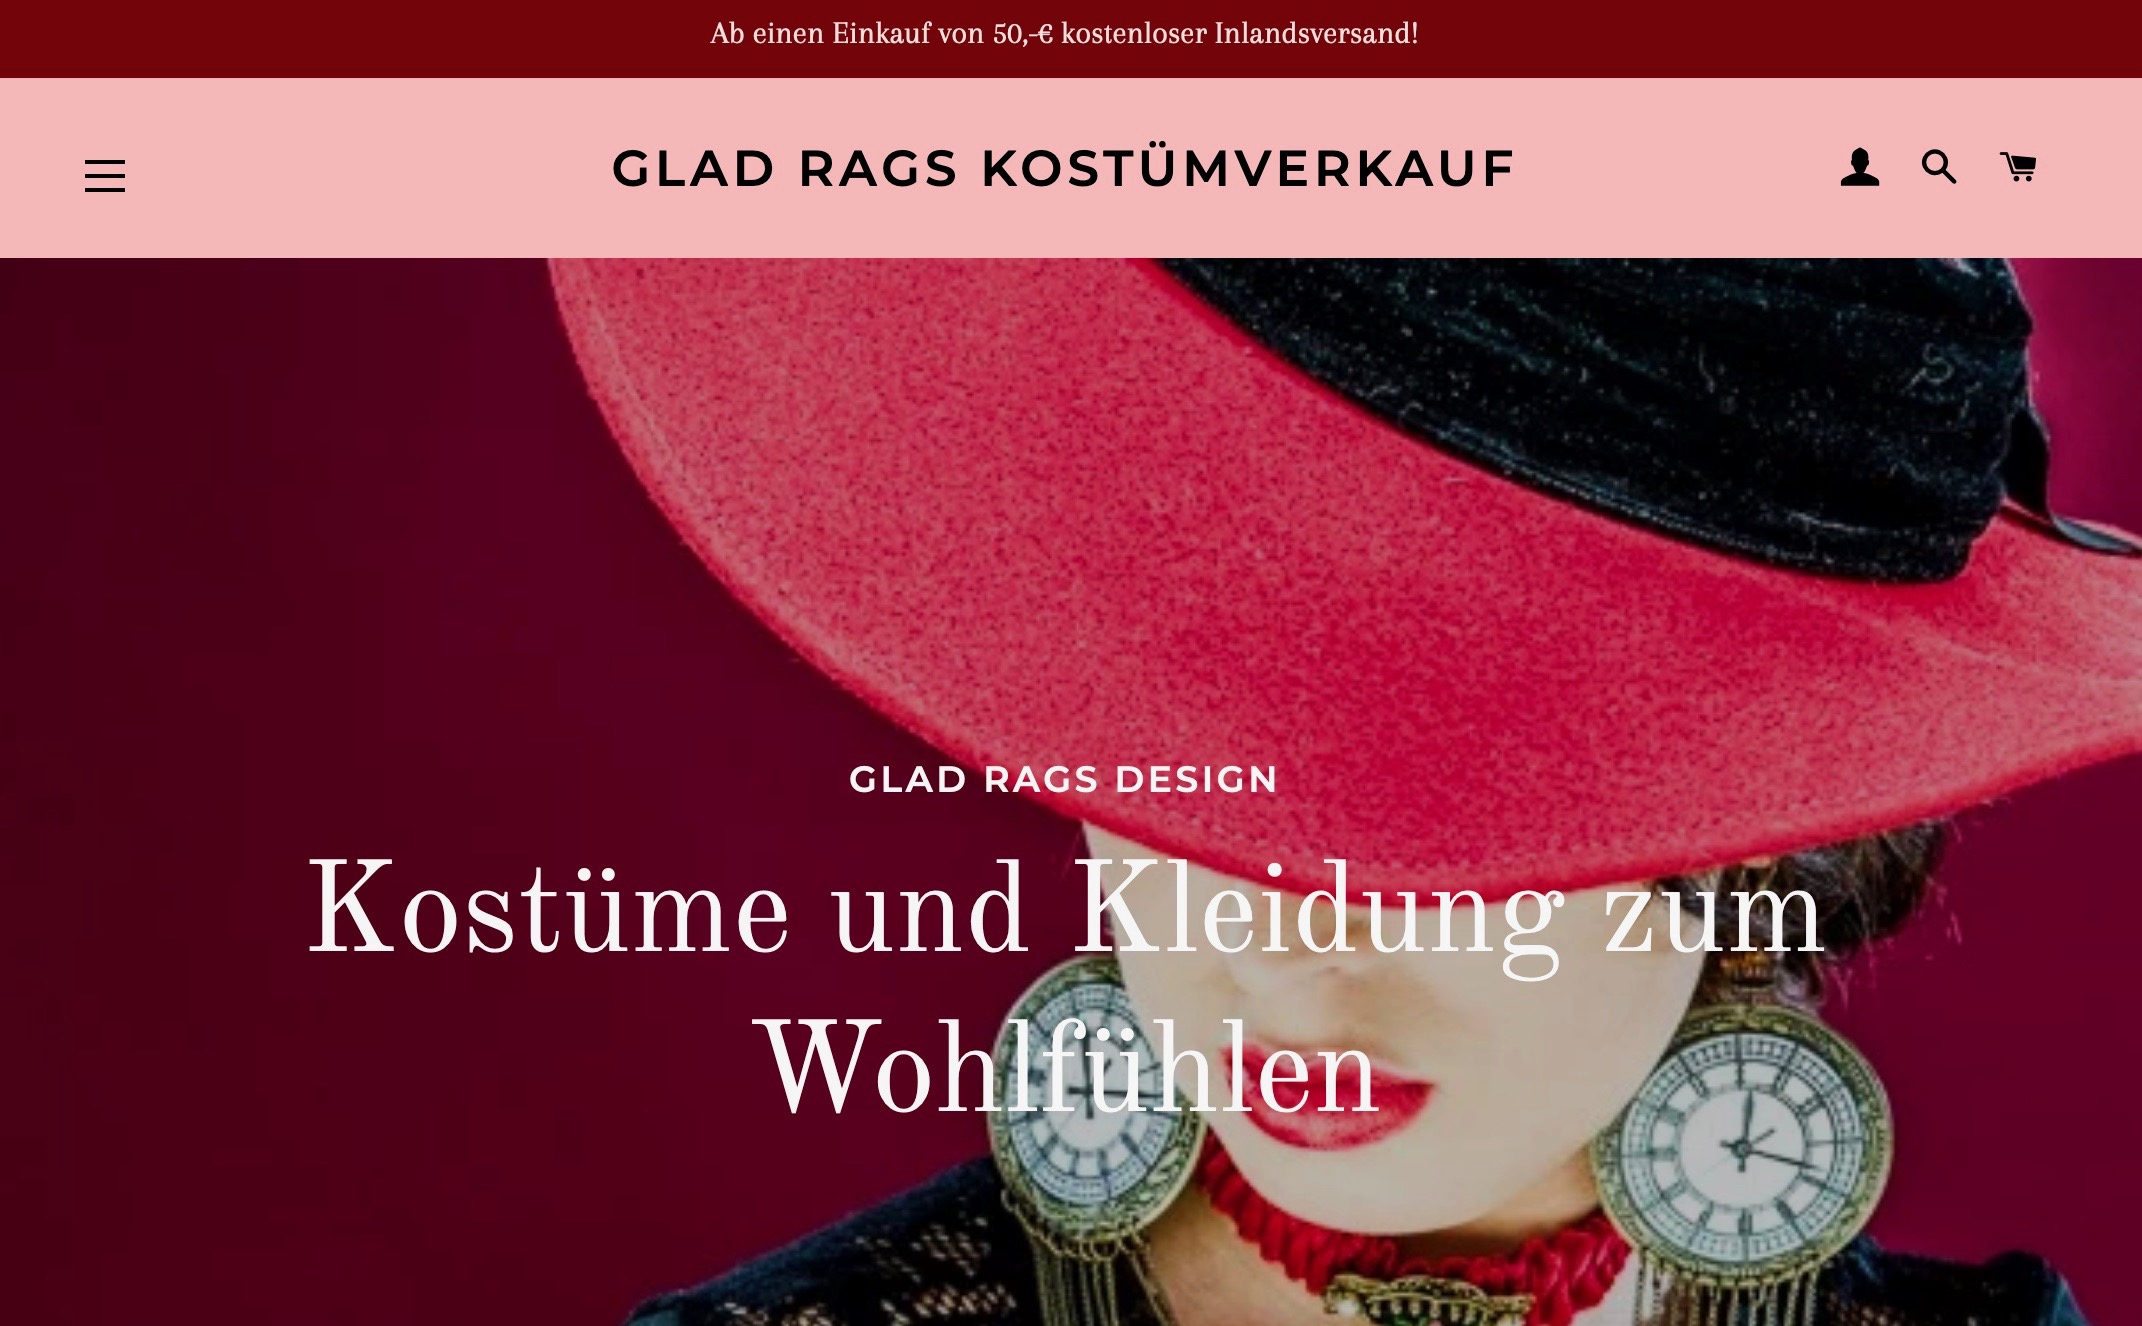 Glad Rags Kostümverkauf in Köln